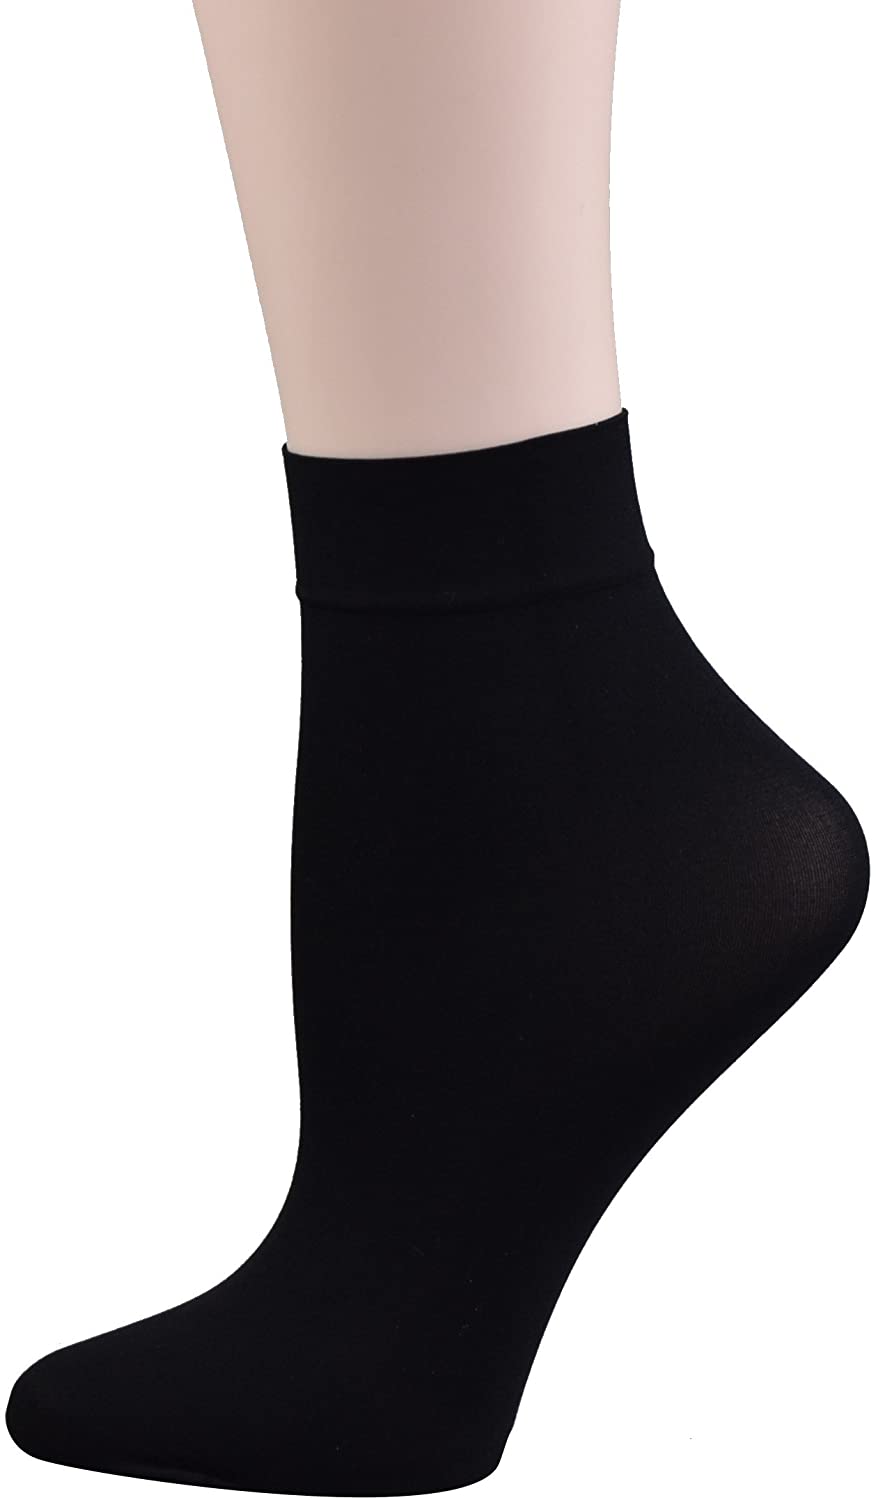 FITU Women's Sheer Nylon Ankle Tights Hosiery Socks (Black) One